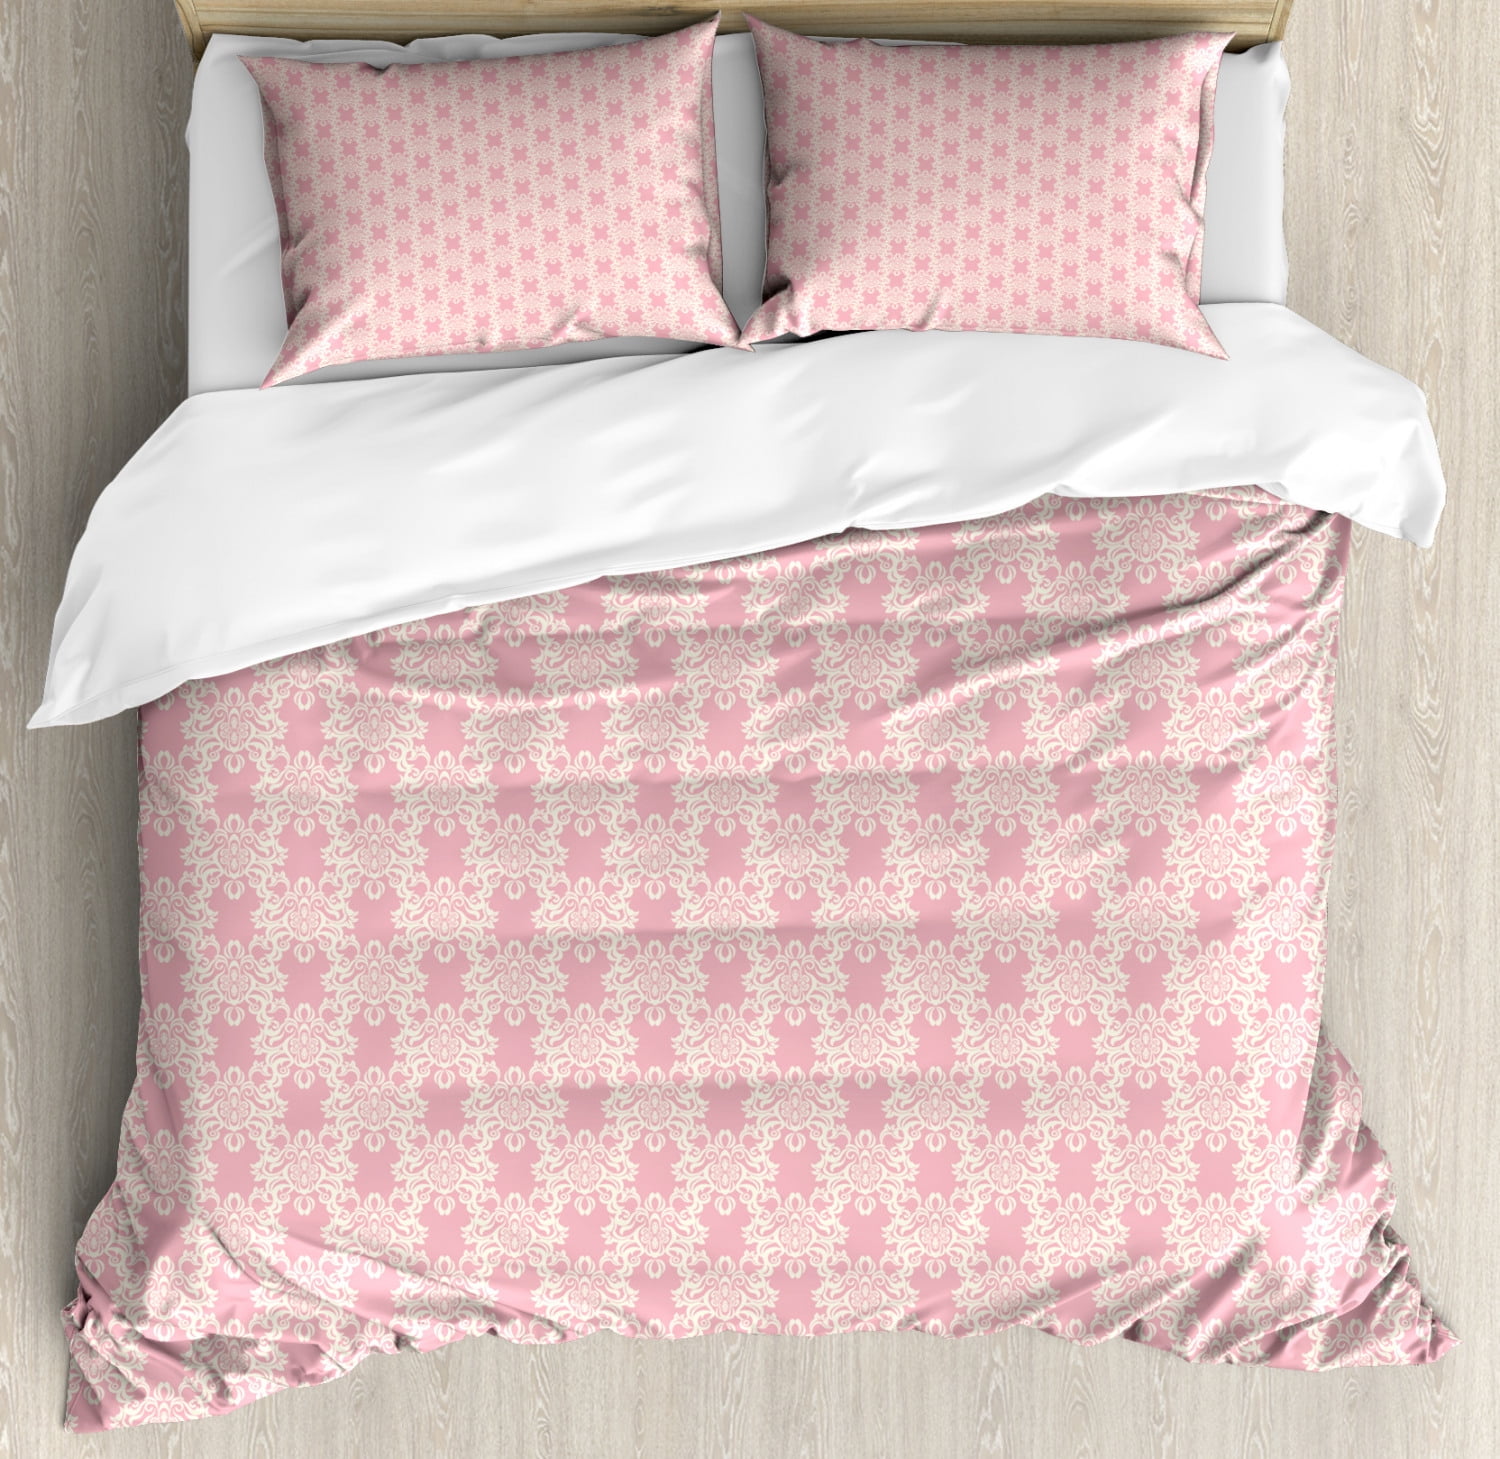 Pink Damask Duvet Cover Set Victorian Inspired Monochrome Floral